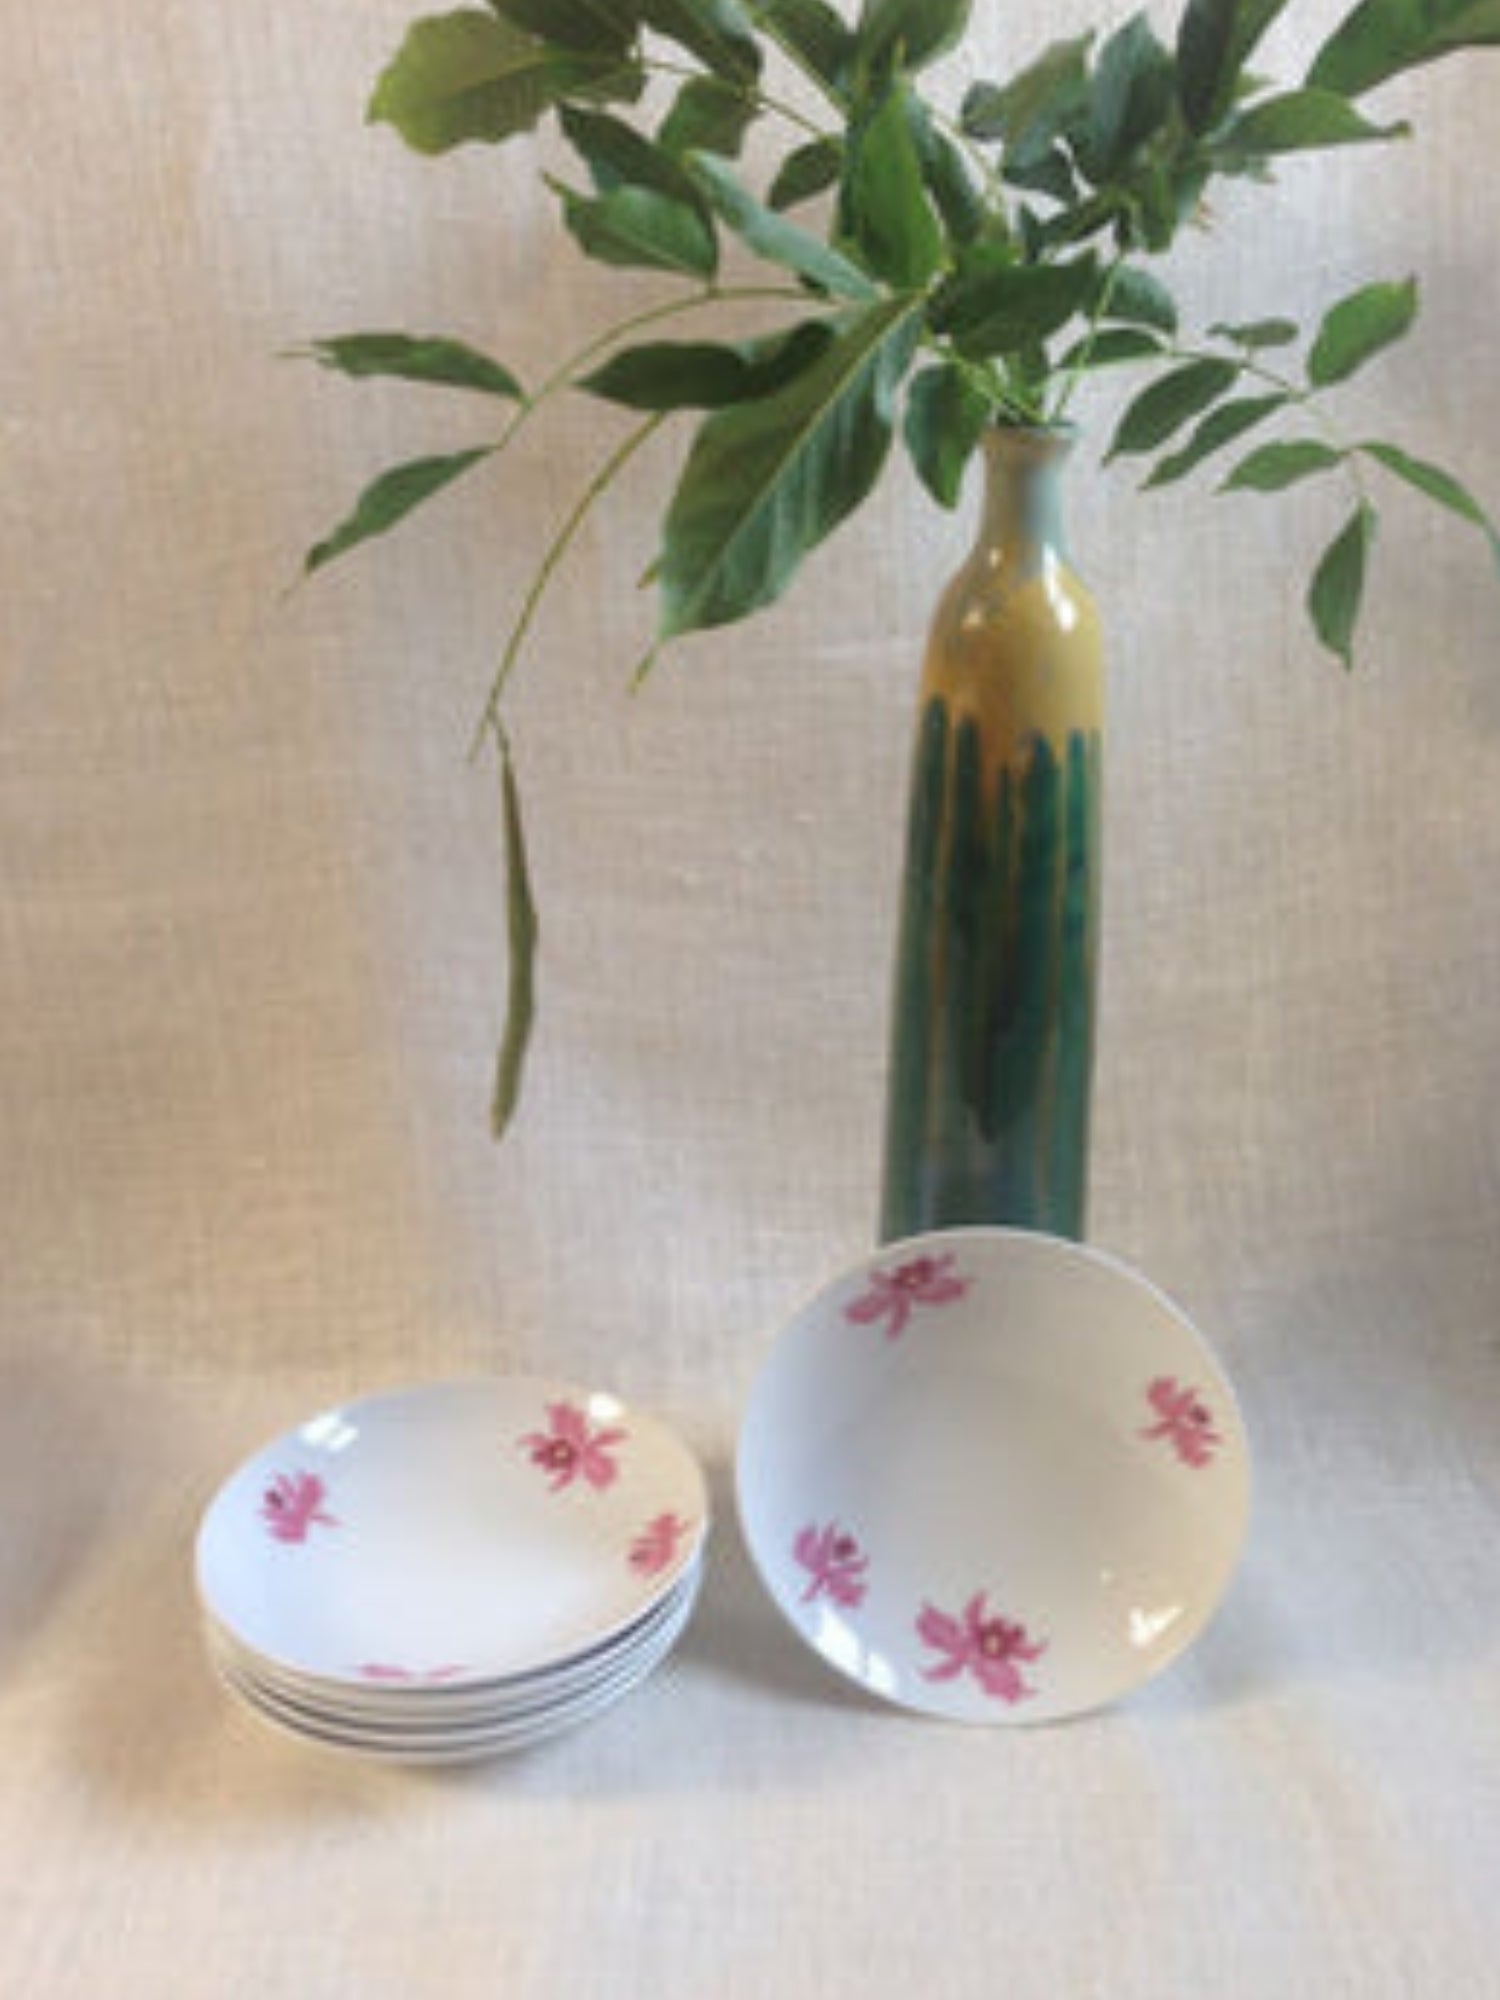 Jasmine's orchid bowls